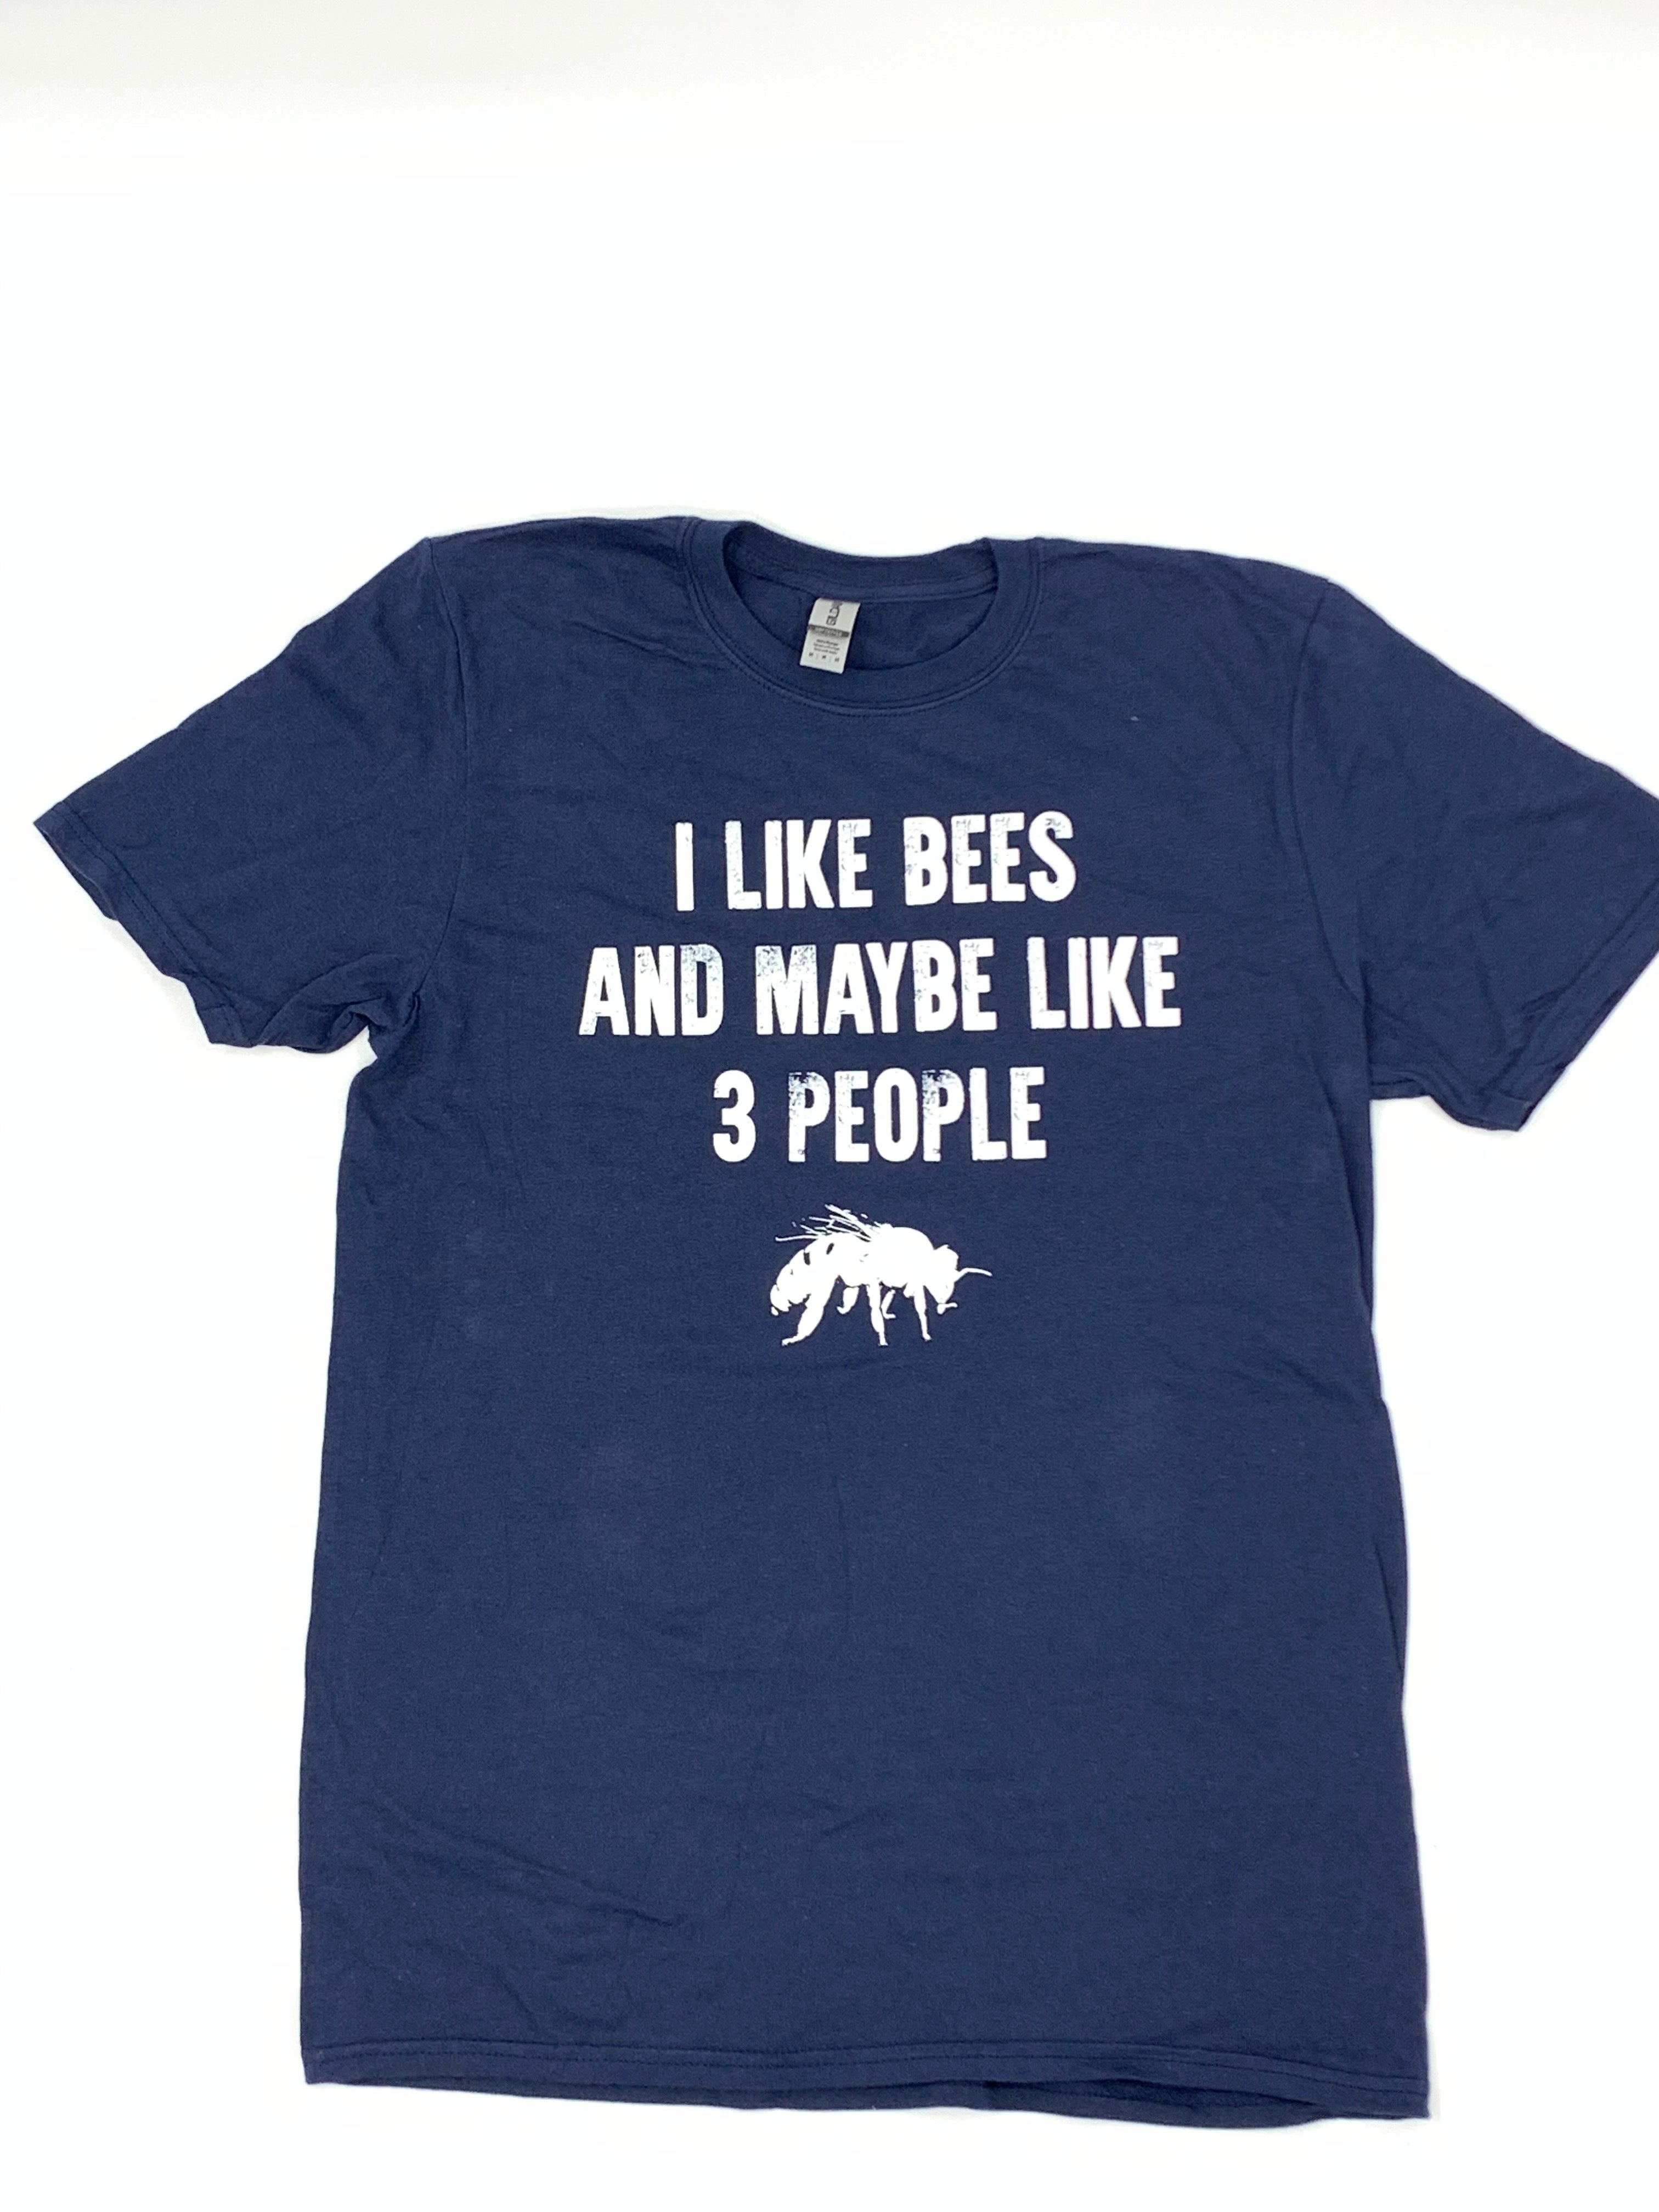 I like bees t shirt.